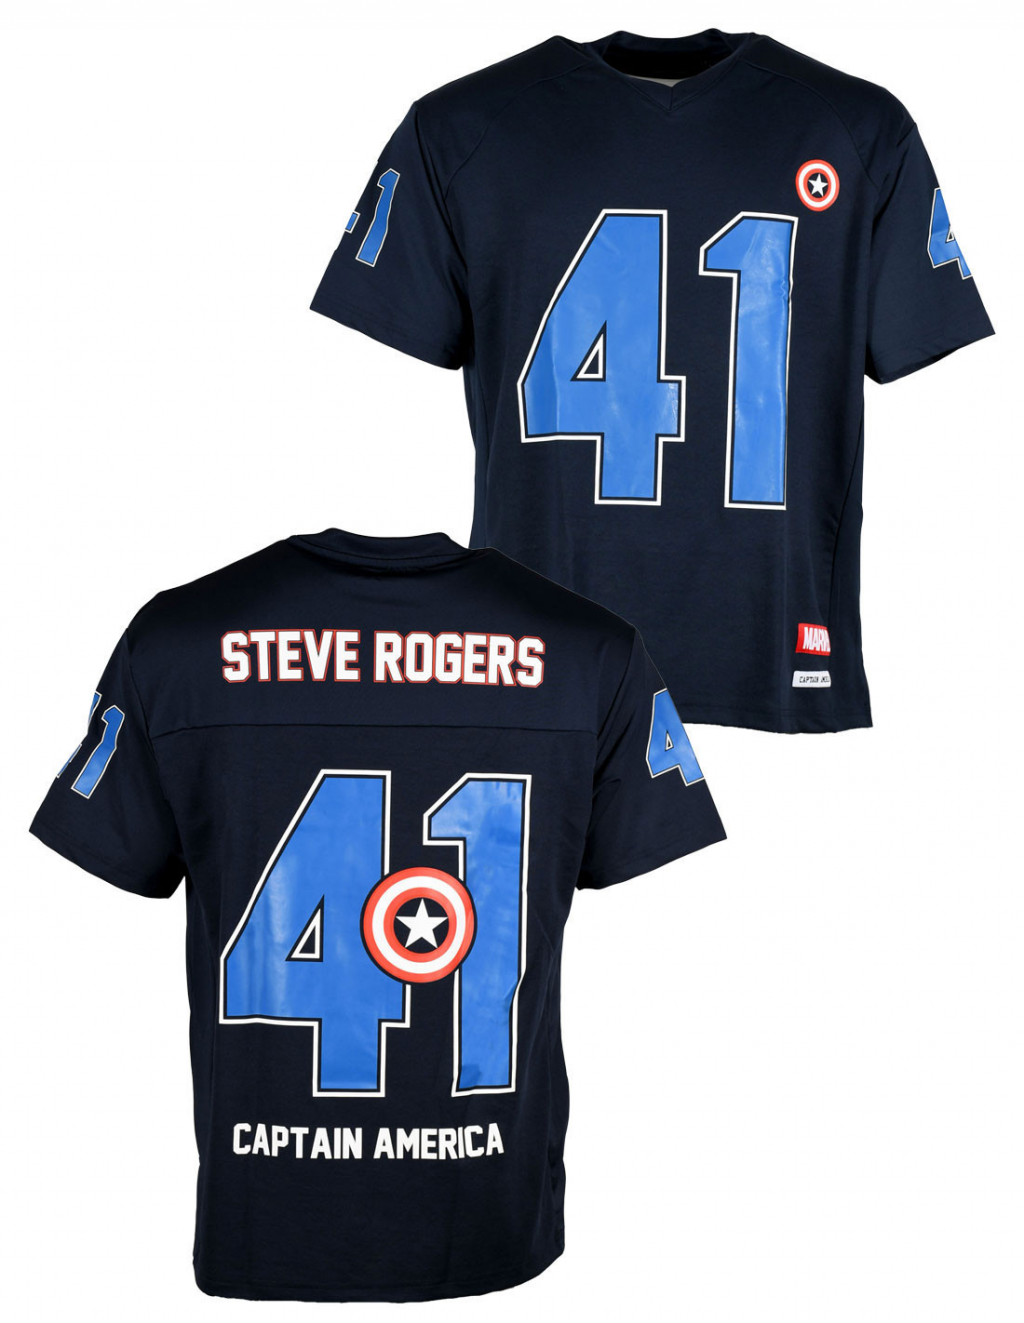 MARVEL - Captain America - T-Shirt Sports US Replica unisex (XL)